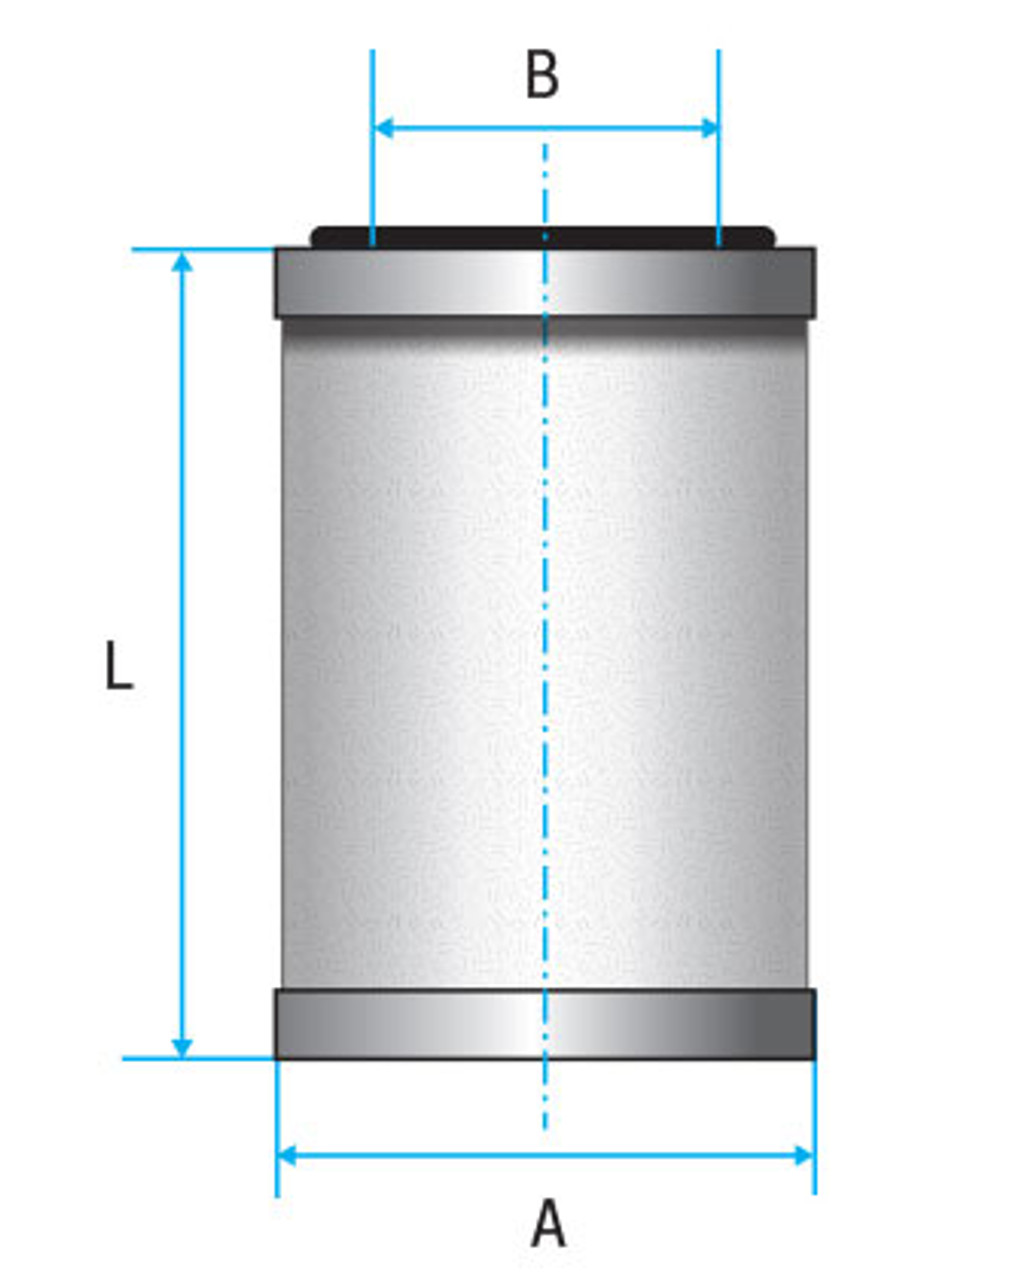 Vacuum Separators Elements (Alternative Leybold) 714-31-120 / SV200B, 300B, 630B, 750B